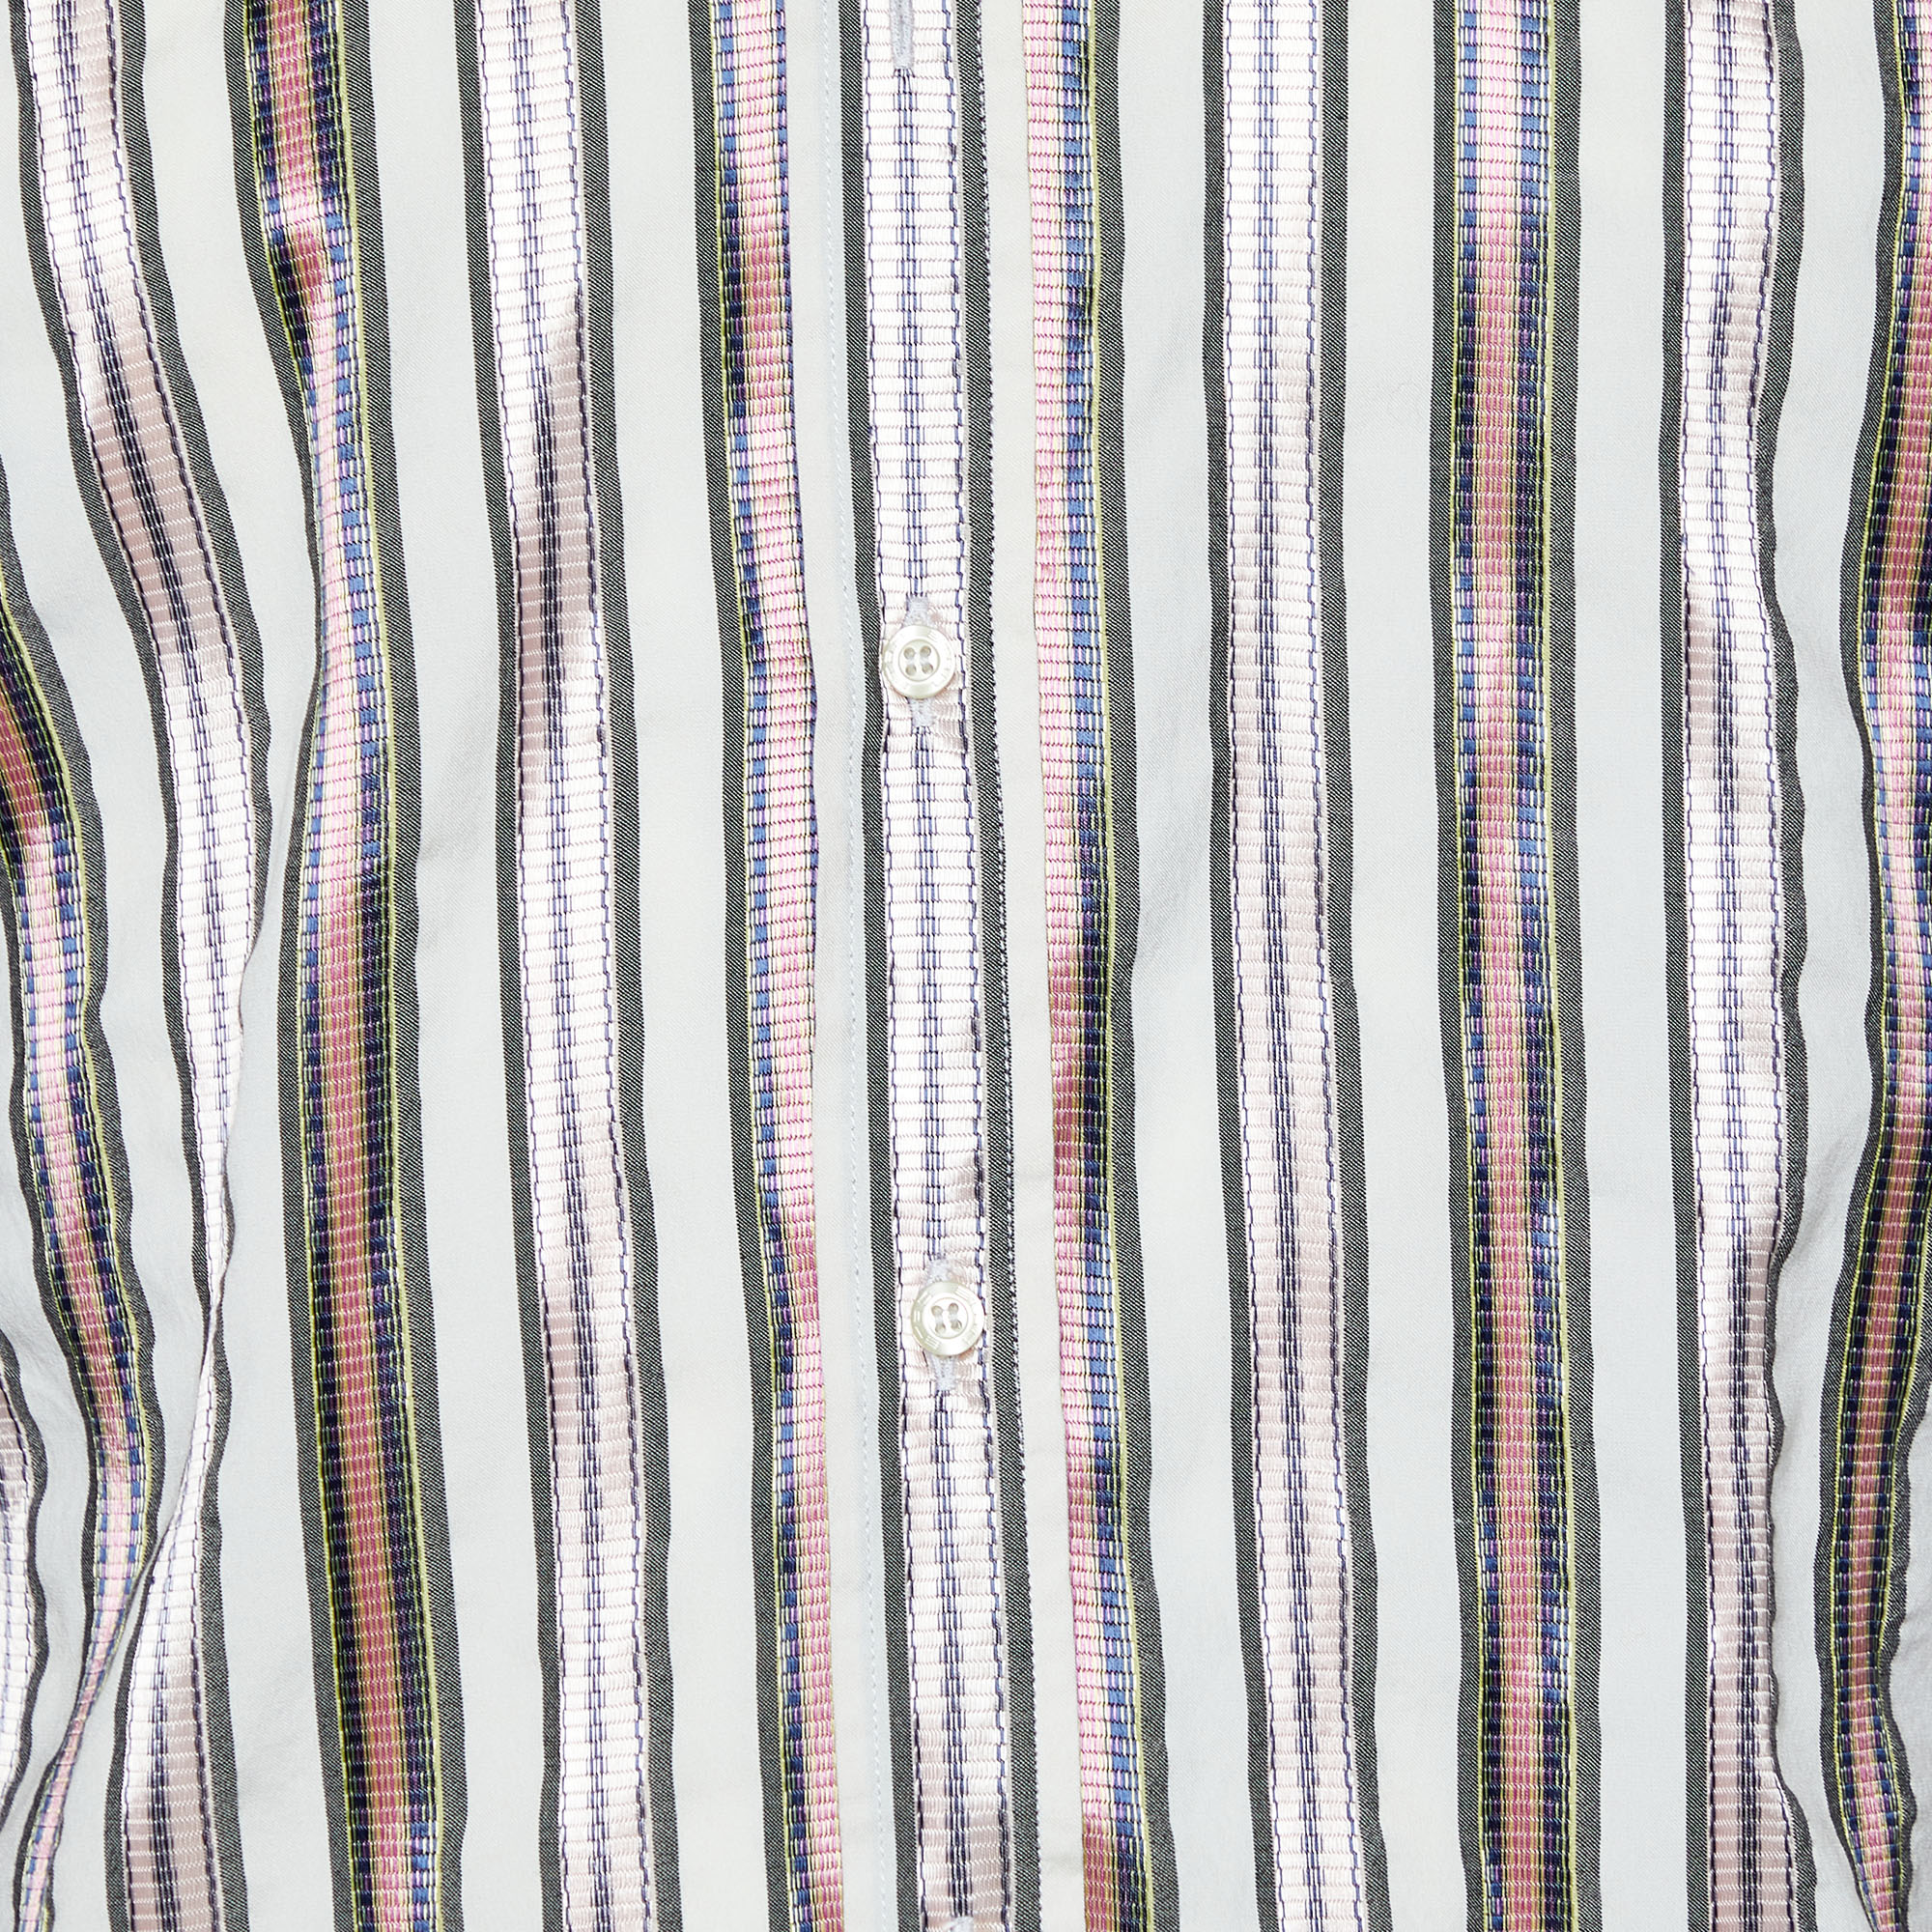 Etro White Striped Detail Cotton Blend Shirt S